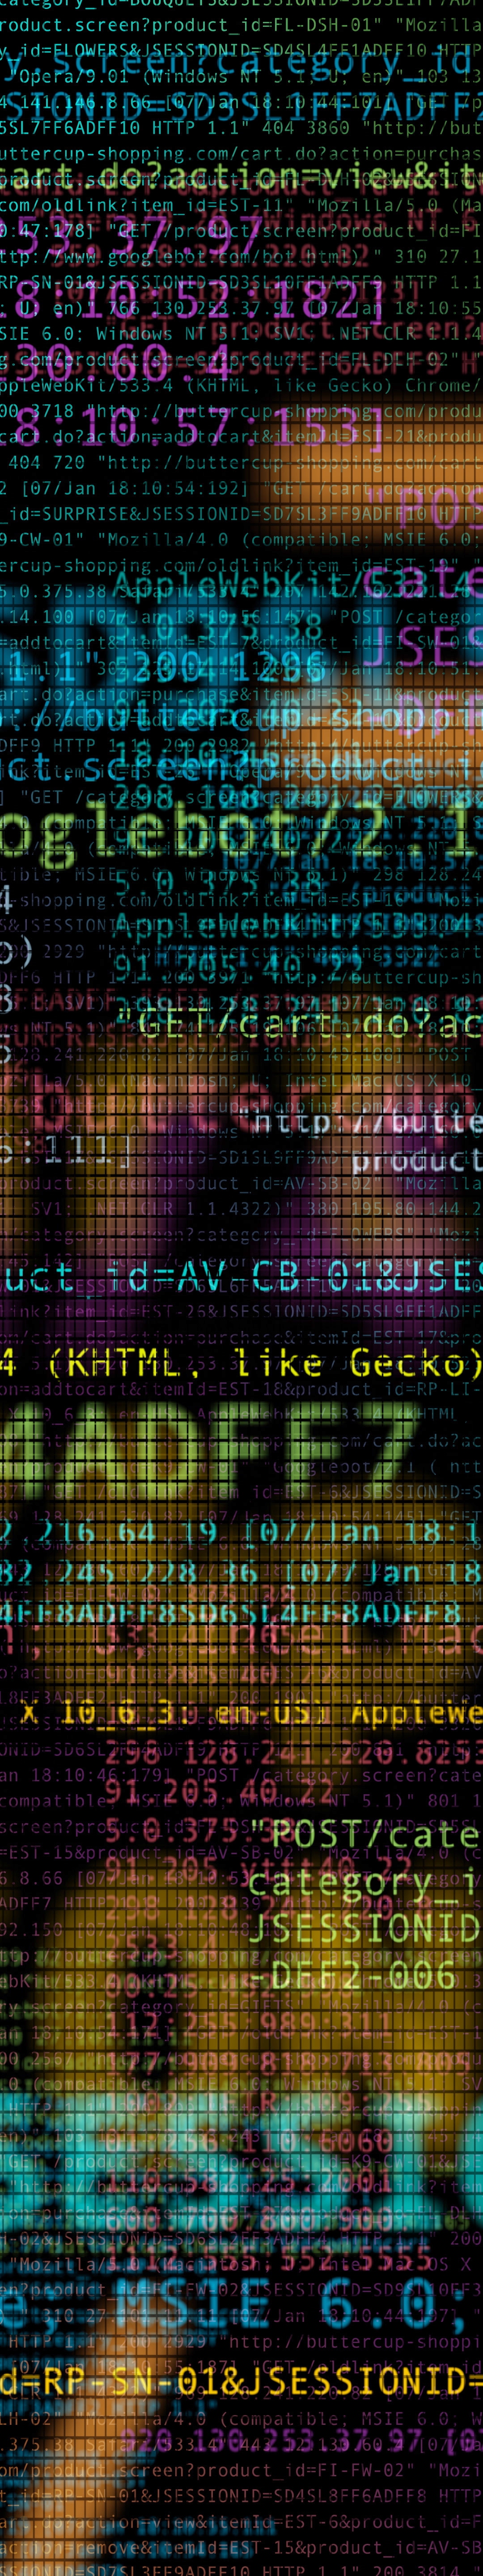 Splunk .conf18 Event Booth Graphic "Code Data"